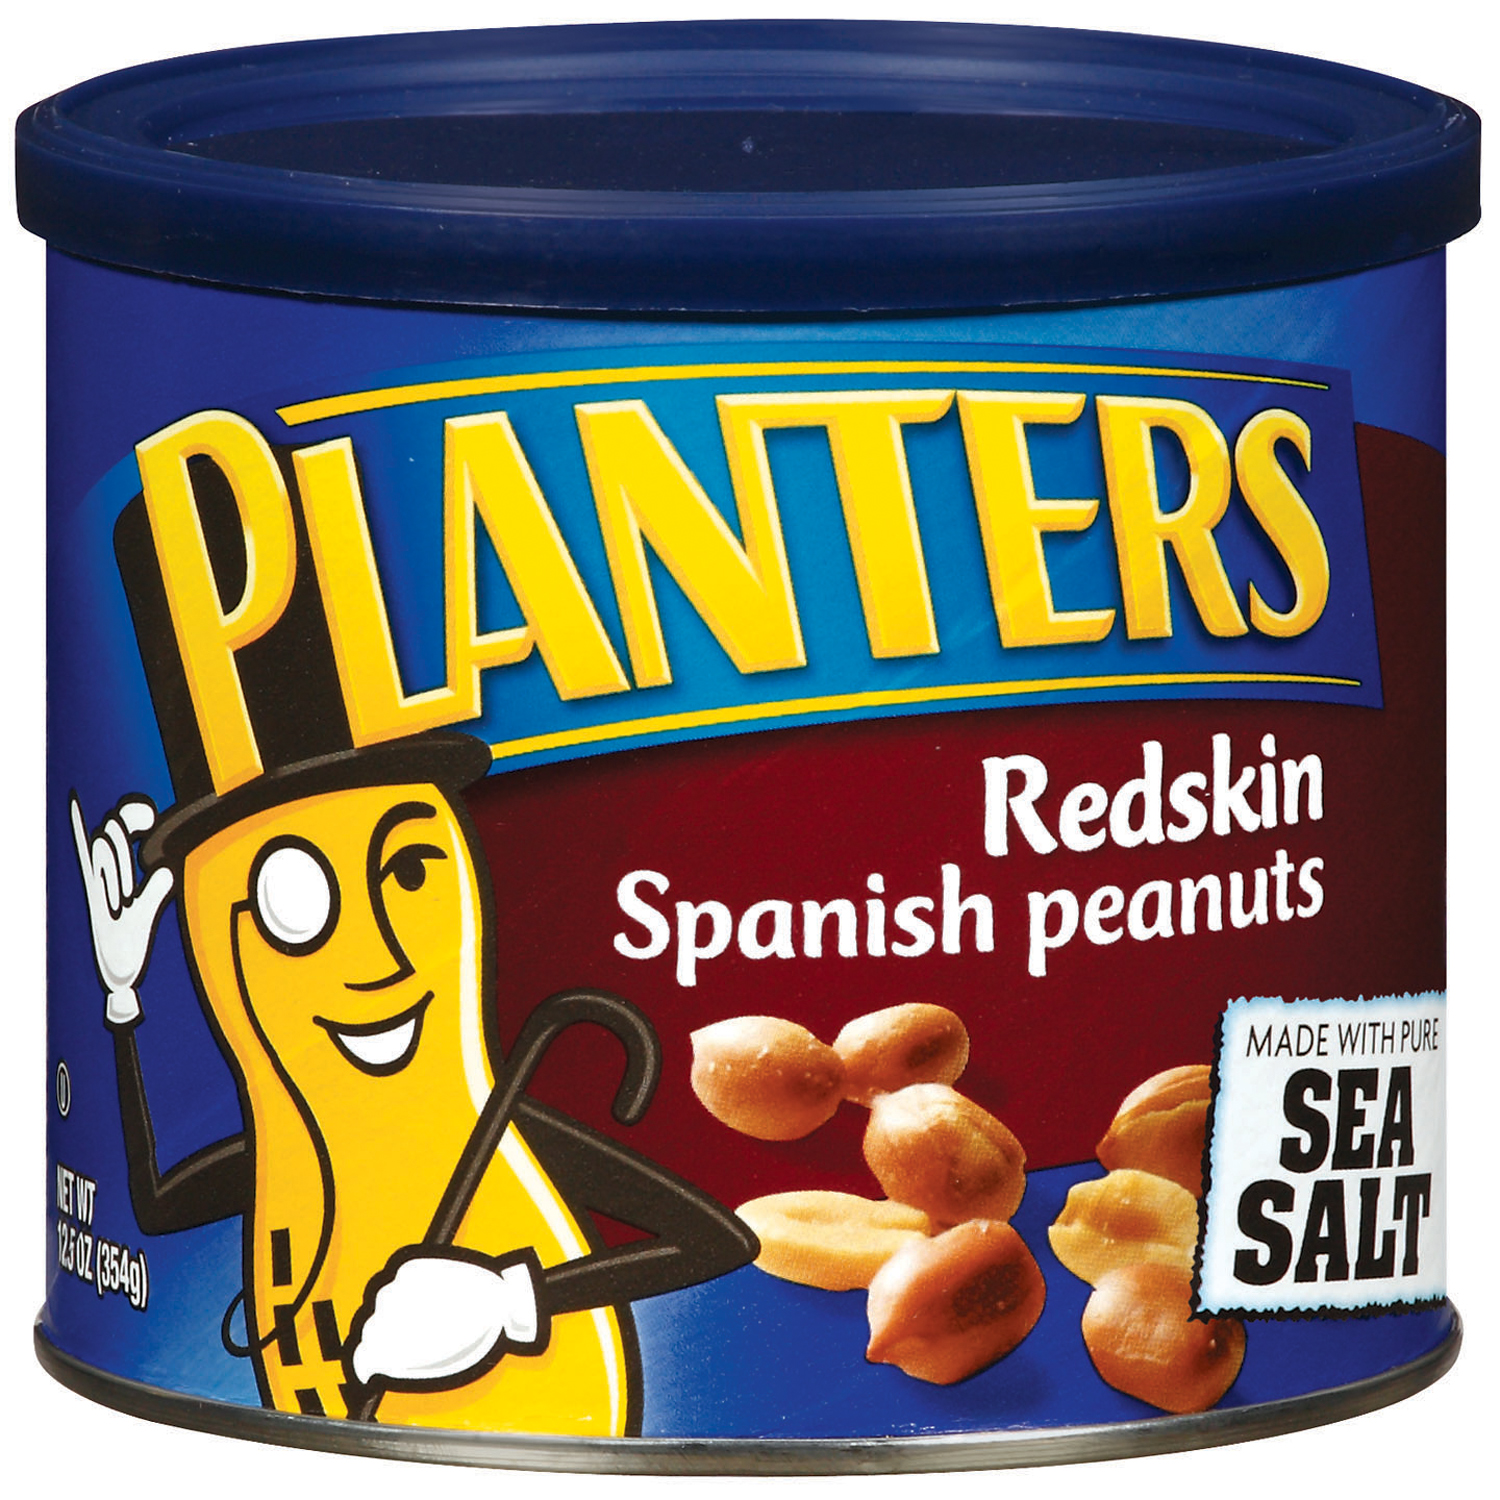 Planters Spanish Redskin W/Sea Salt Peanuts - Food & Grocery - Snacks - Nuts, Seeds ...1500 x 1500